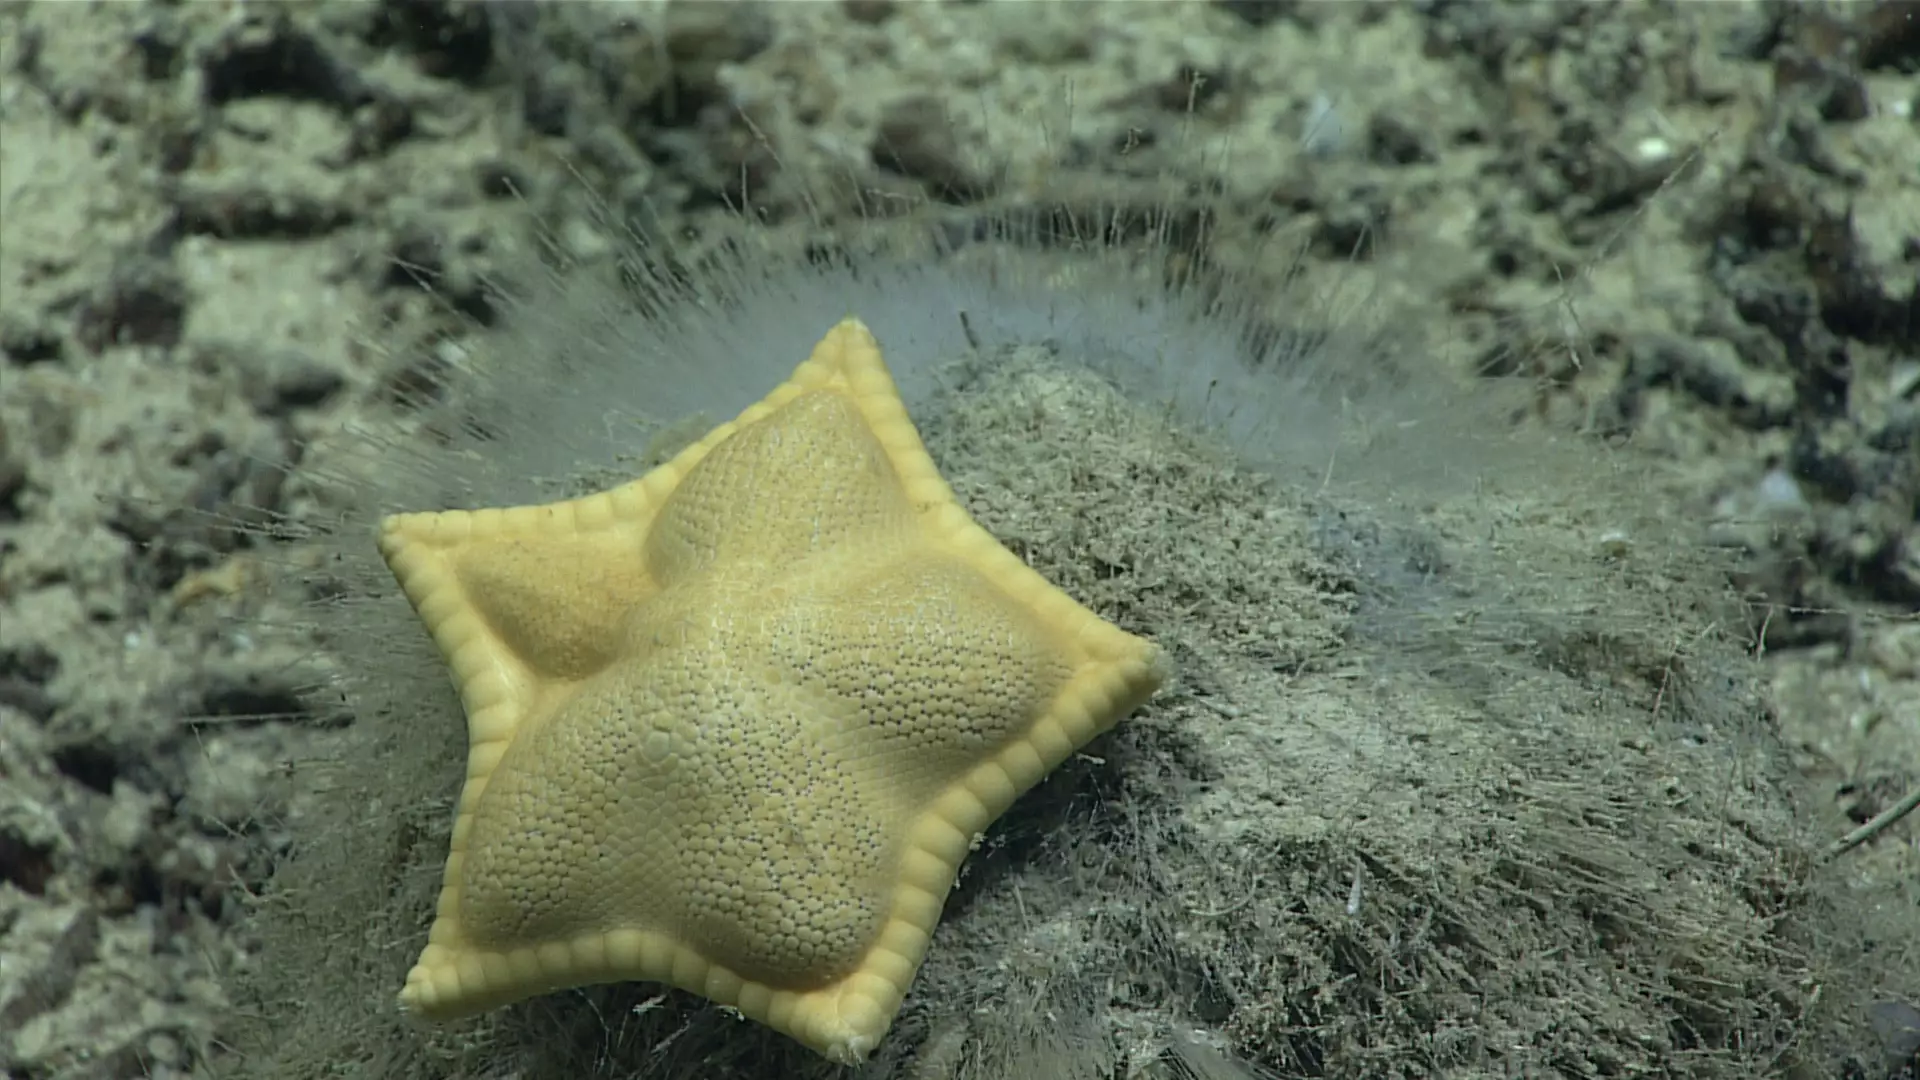 Scientists Photograph Starfish That Looks Just Like Ravioli 